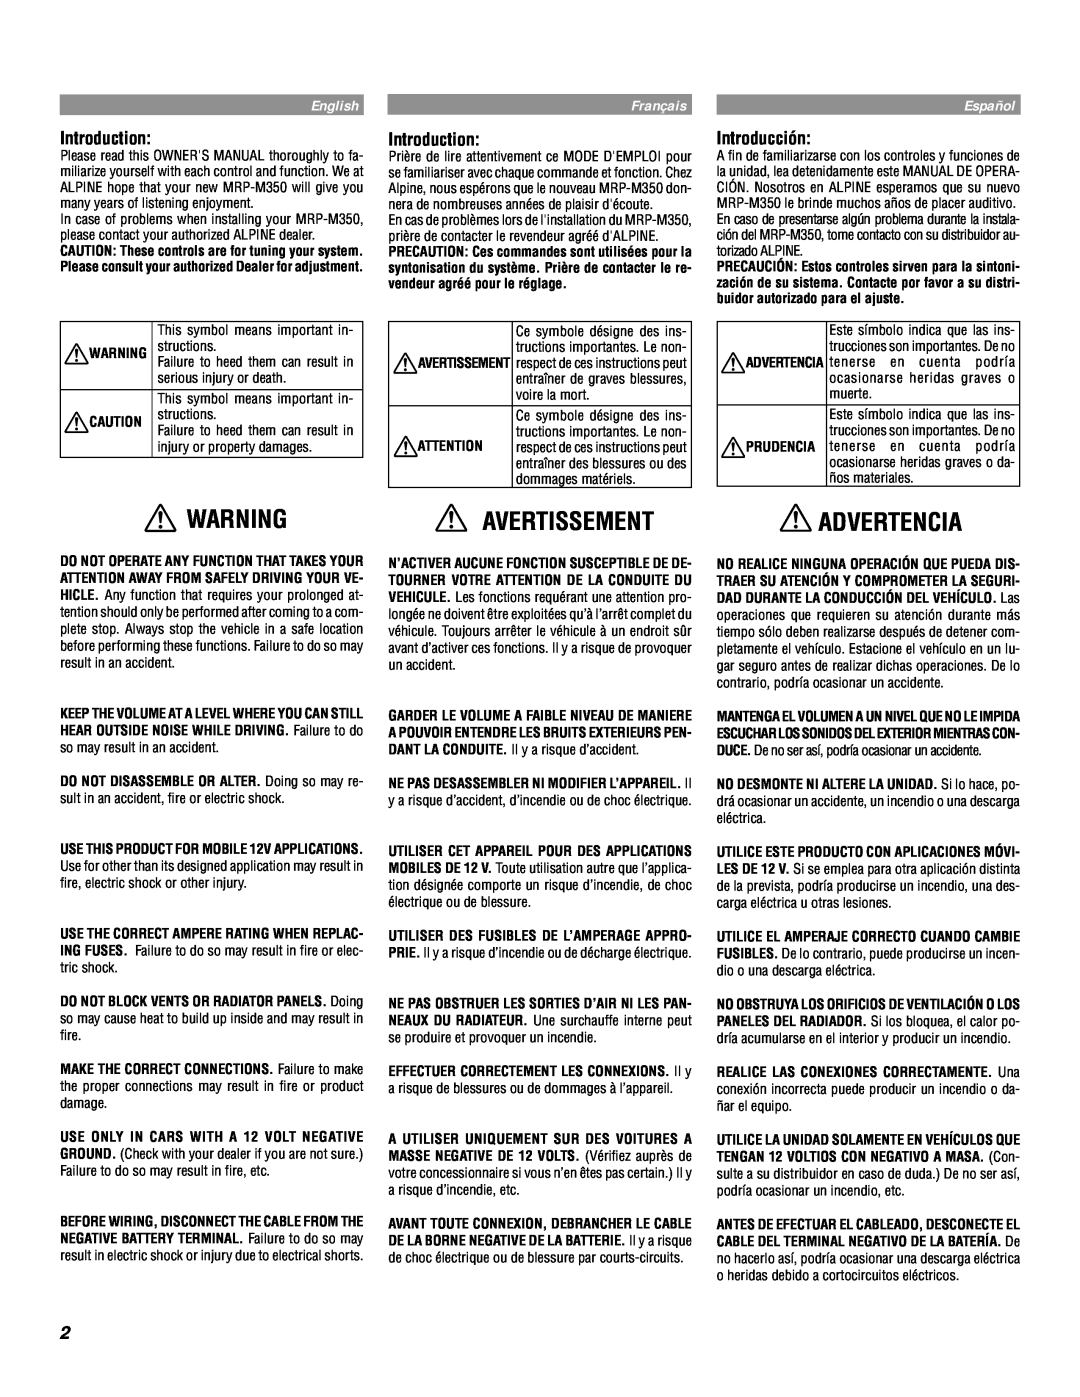 Alpine MRP-M350 owner manual Avertissement, Advertencia, Introduction, Introducción, English, Français, Español 